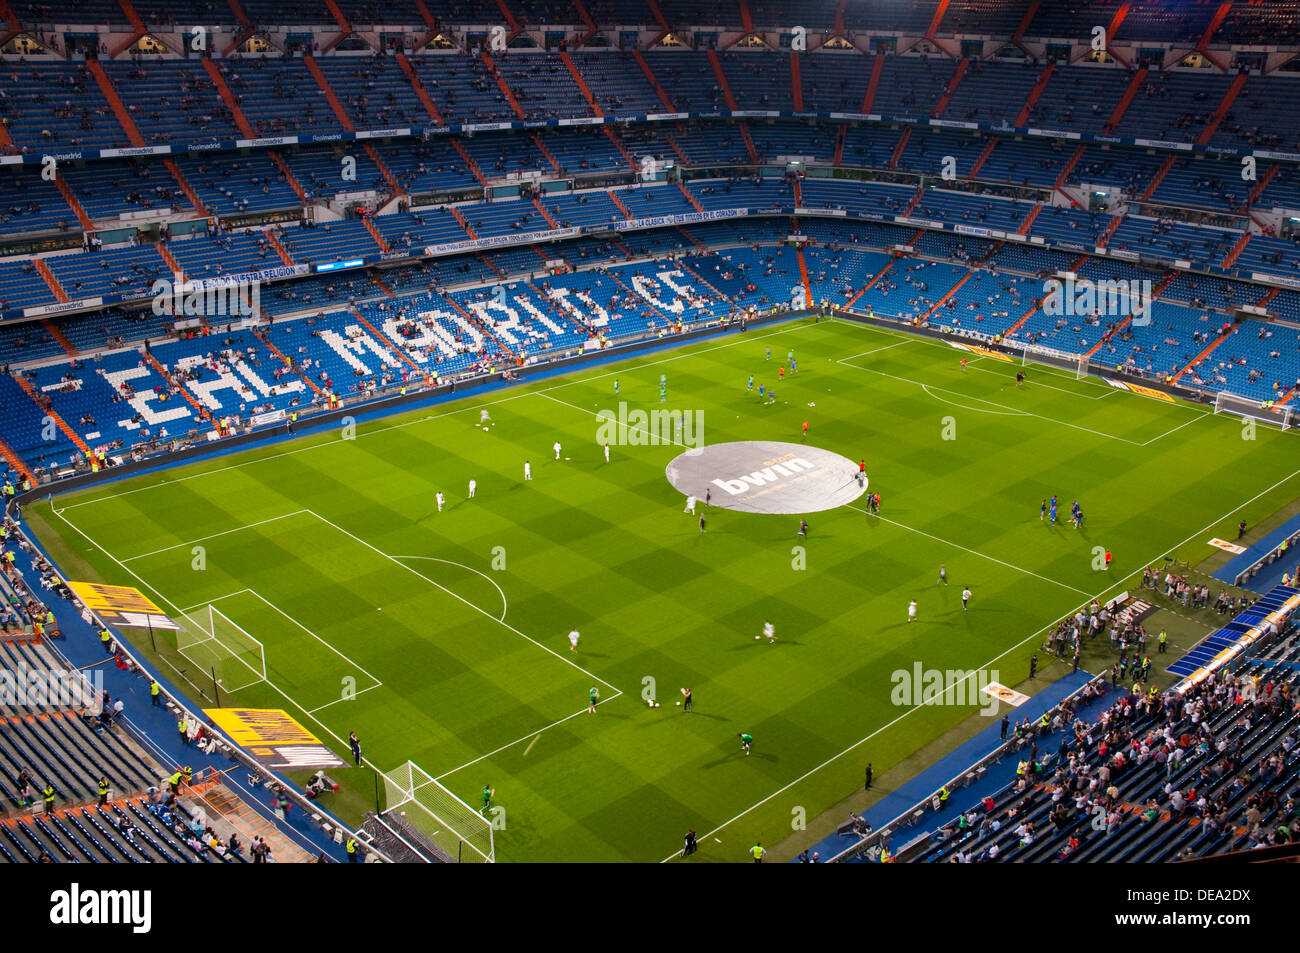 Real Madrid versus Getafe football match. Santiago Bernabeu stadium, Madrid, Spain. Stock Photo